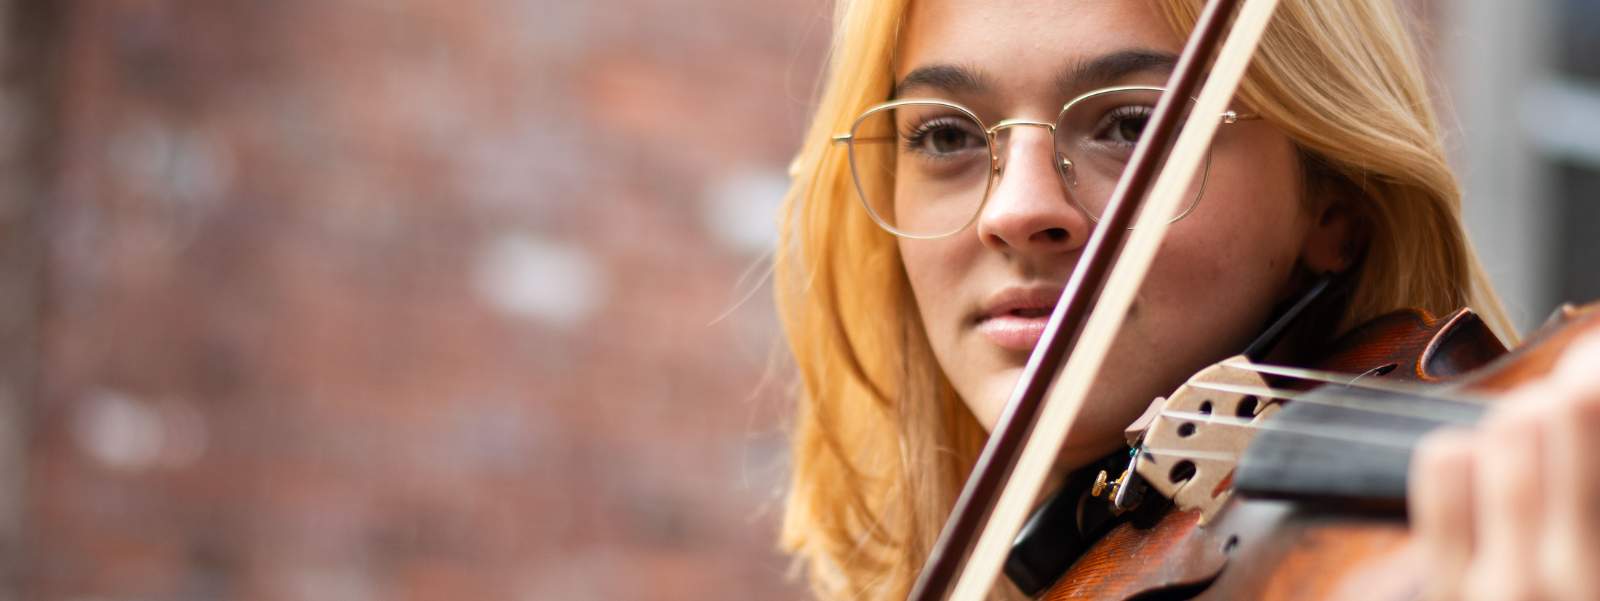 Young woman playing violin.